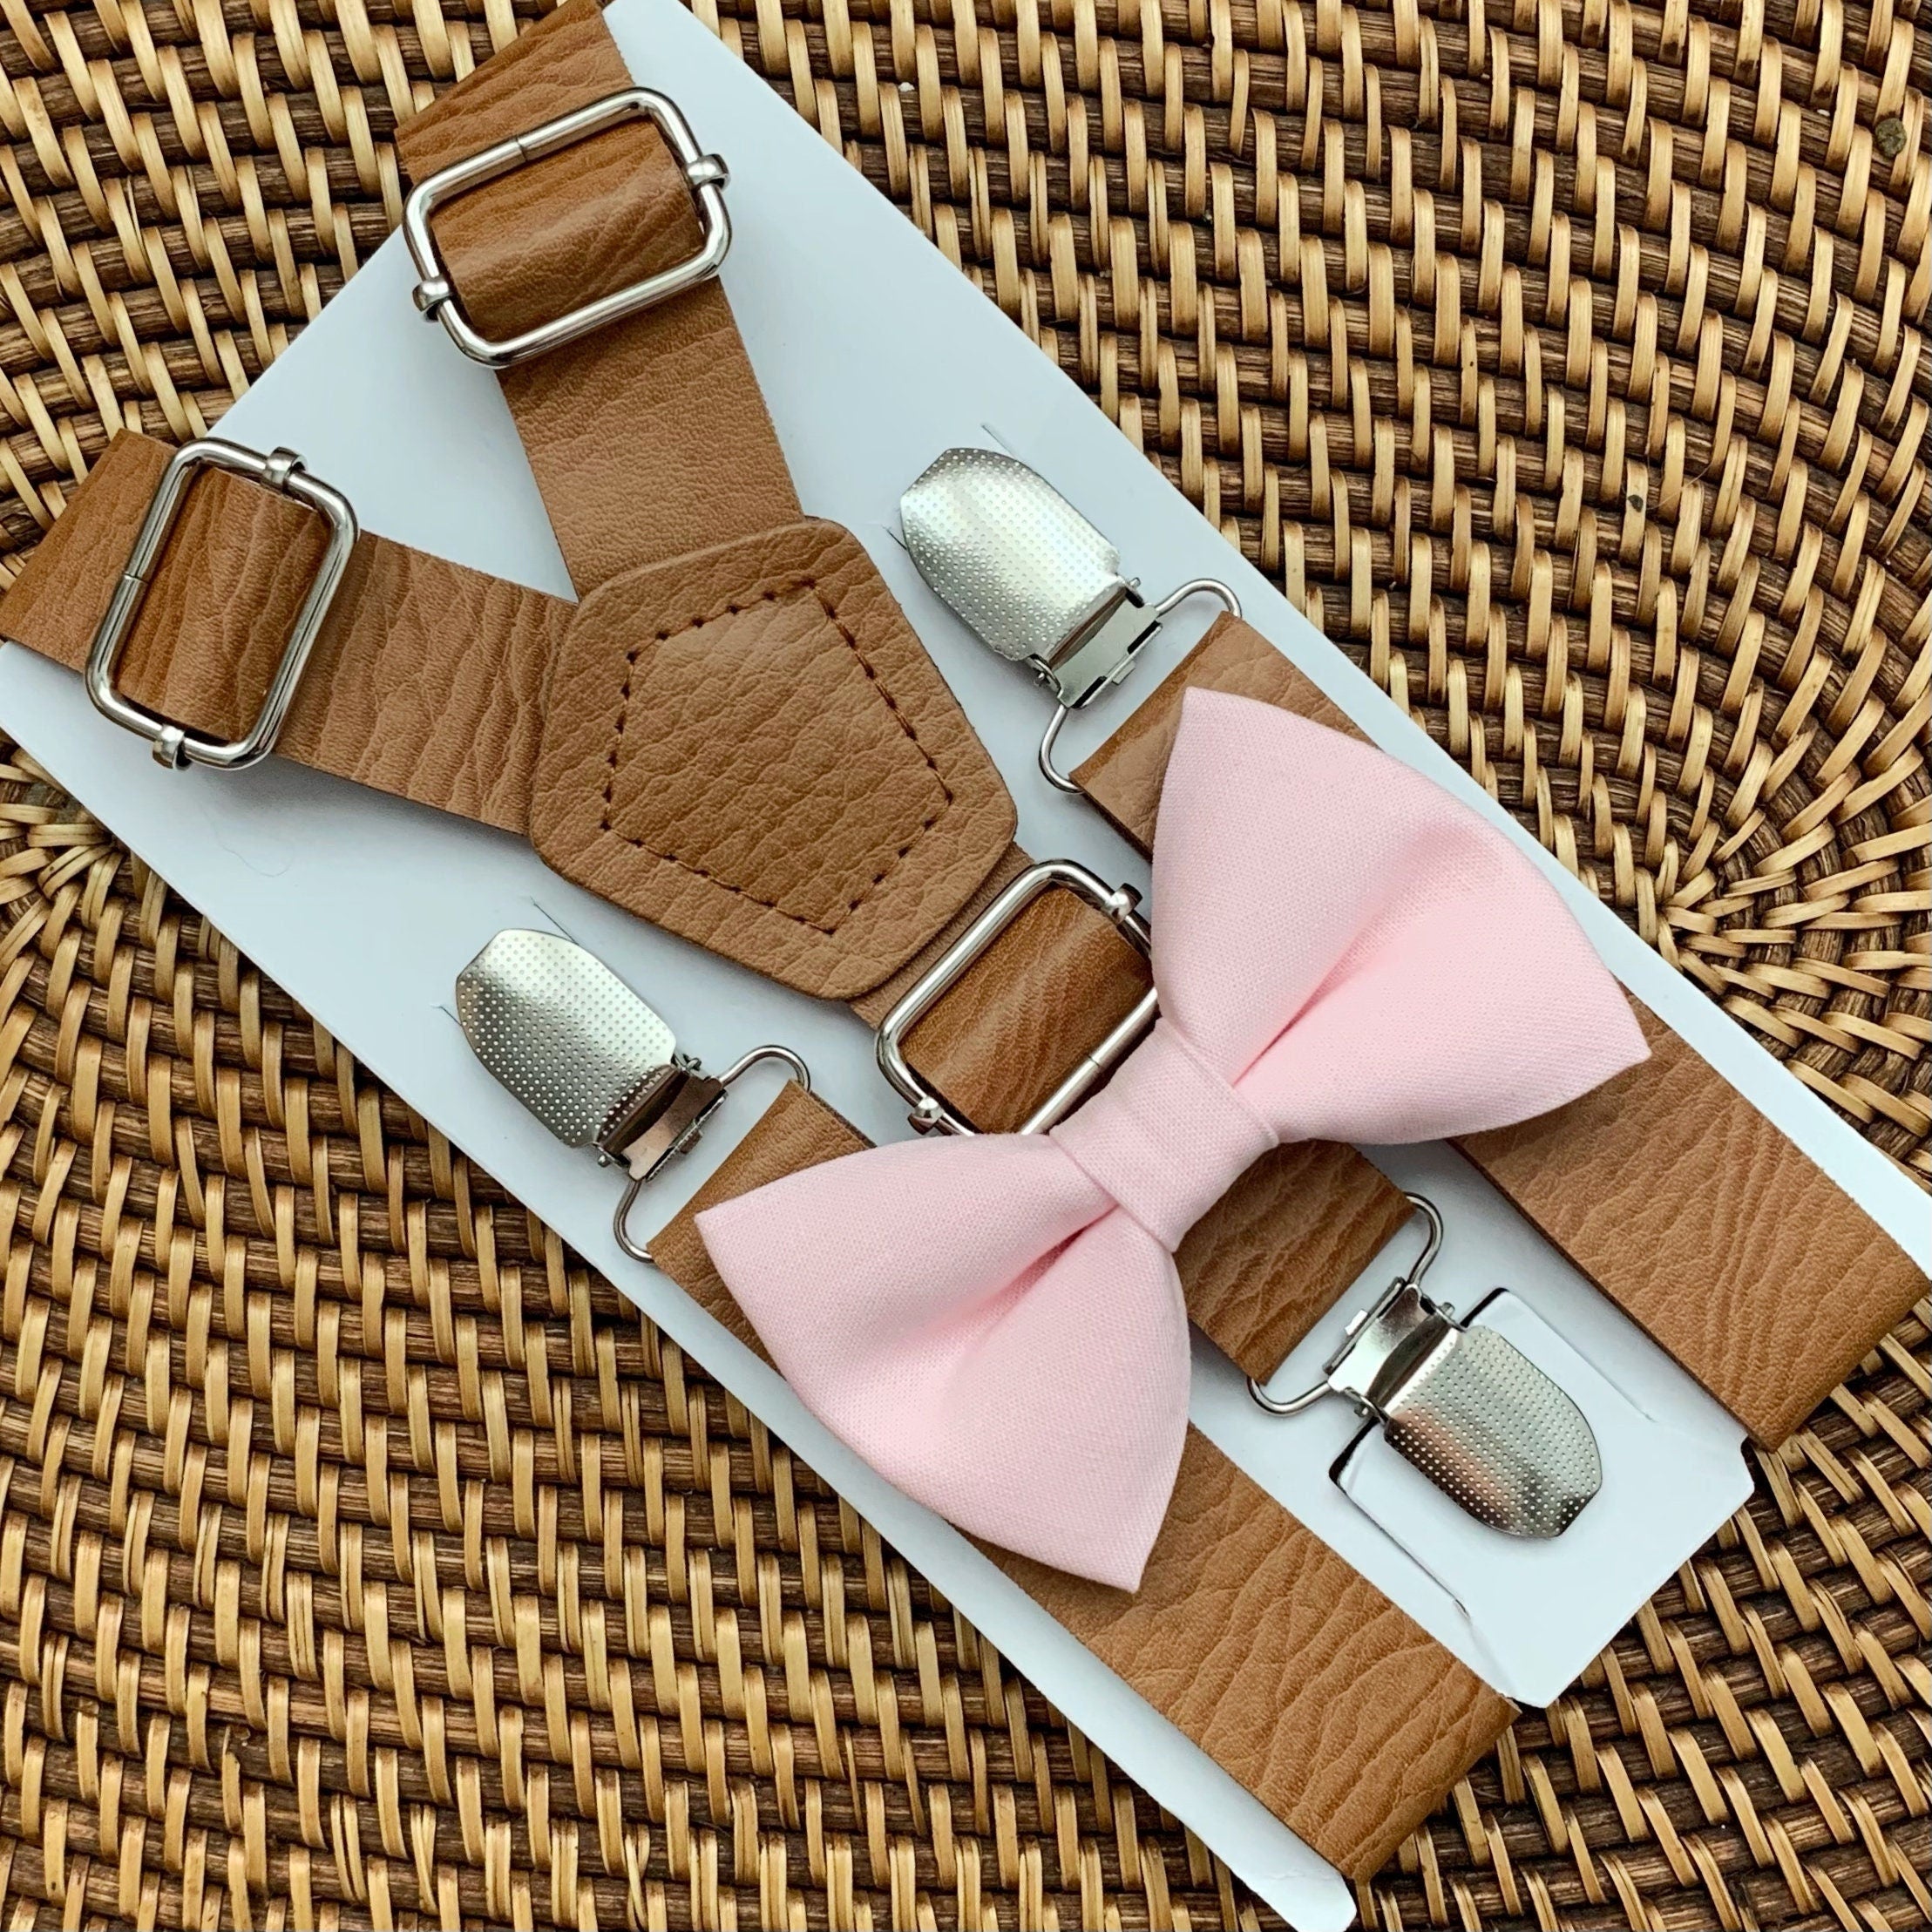 Blush Pink Bow Tie & Tan Vegan Leather Suspenders